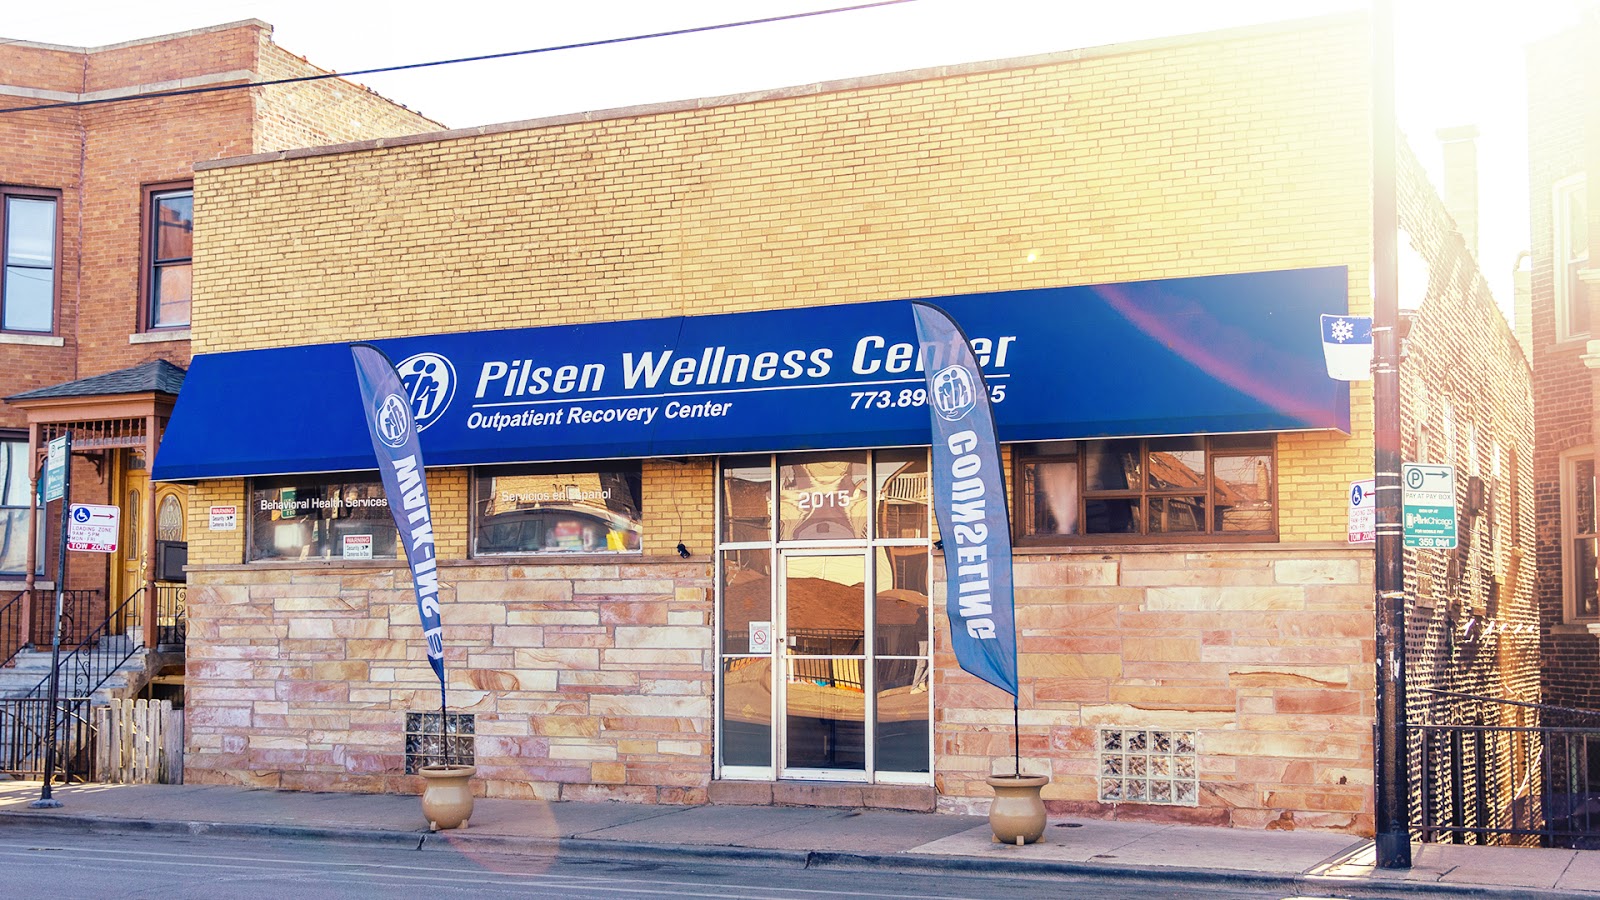 Pilsen Wellness Center - Outpatient Recovery Center (ORC)